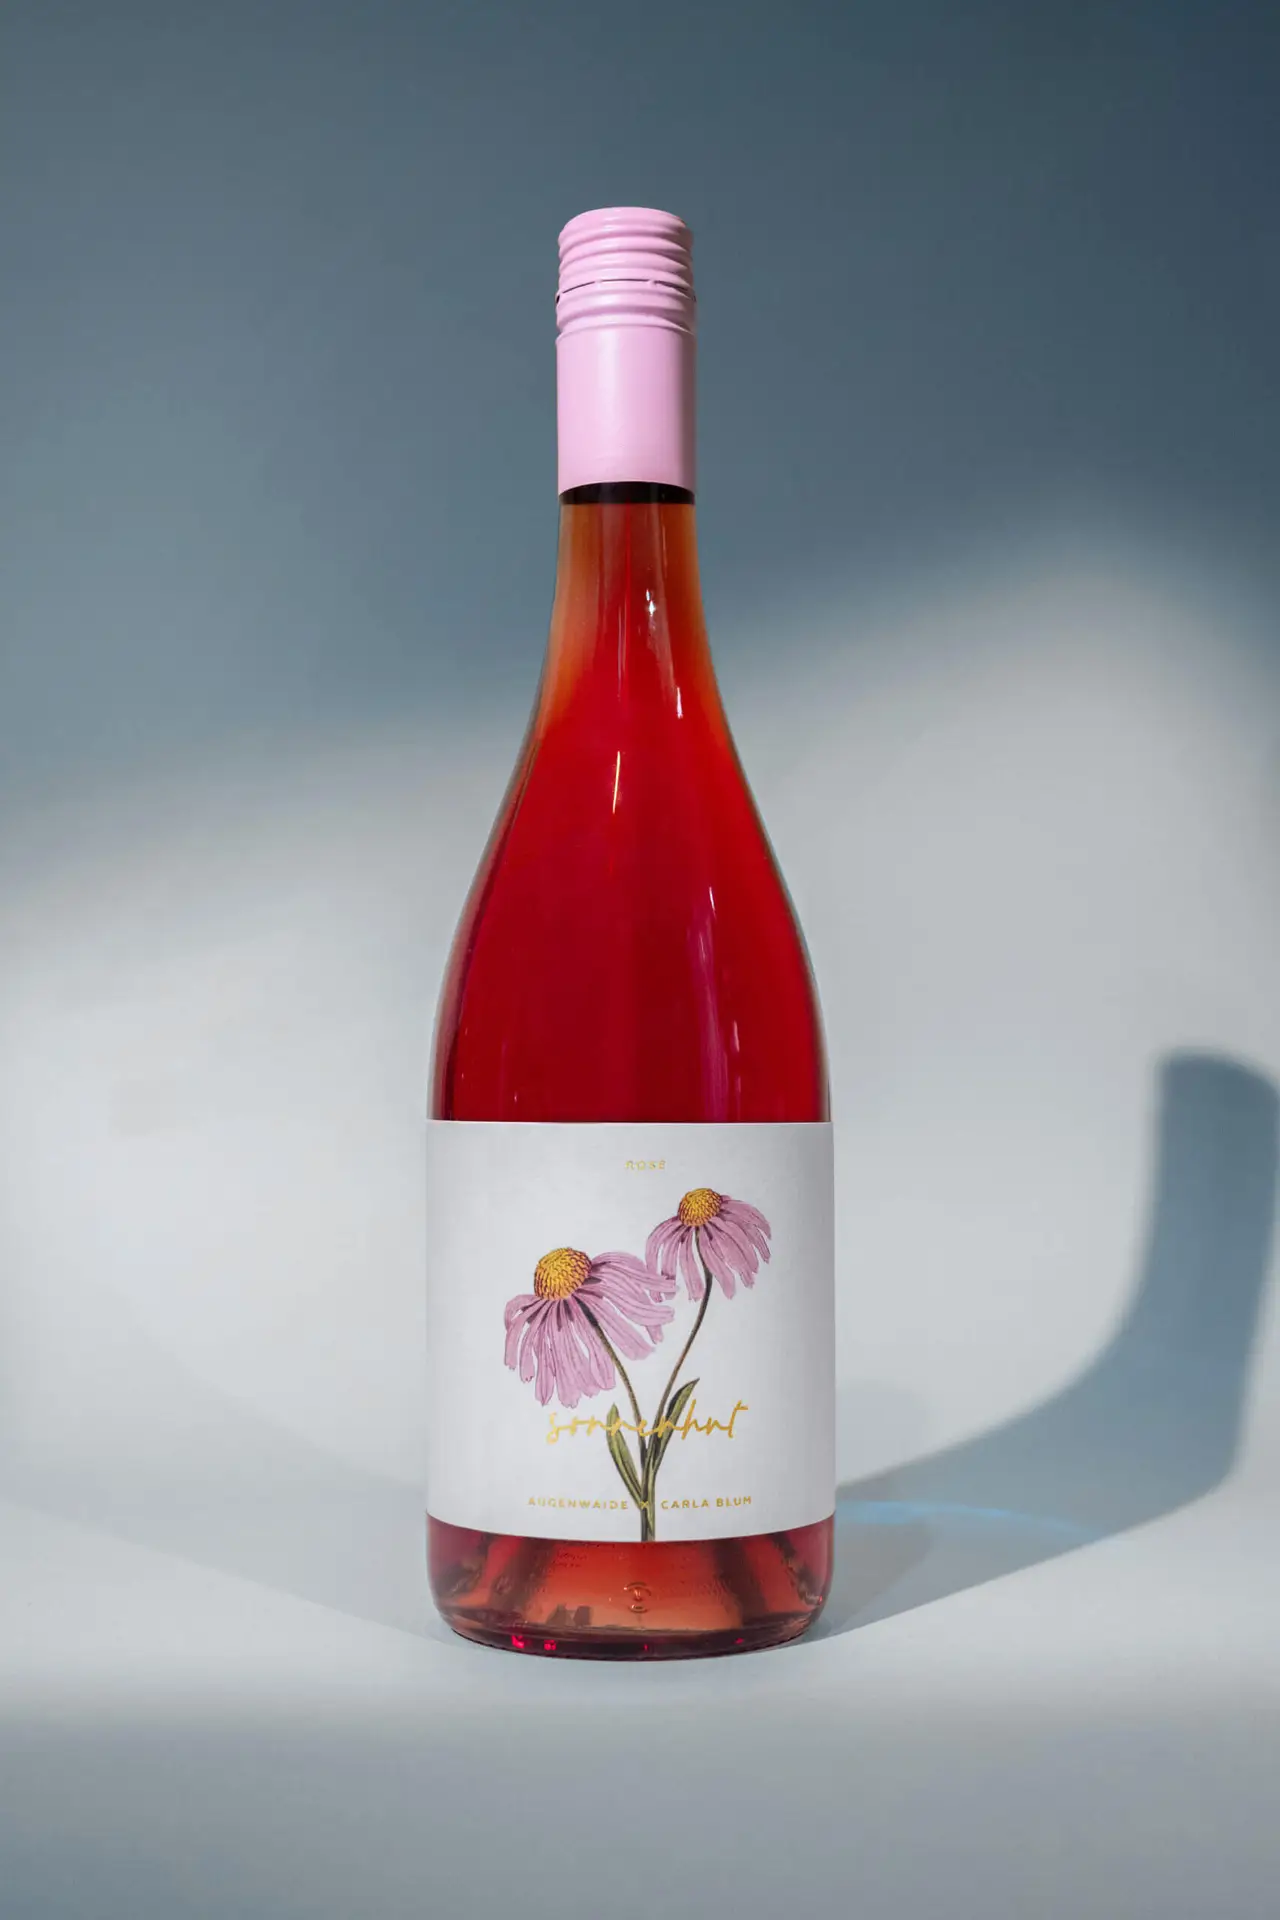 Mona-Wingerter-portfolio-grafiker-grafikdesigner-freelance-art-director-Wine-winebottle-packagingdesign-label-labeldesign-logo-brand-design-Flower-Augenwaide-Carla-Blum-3